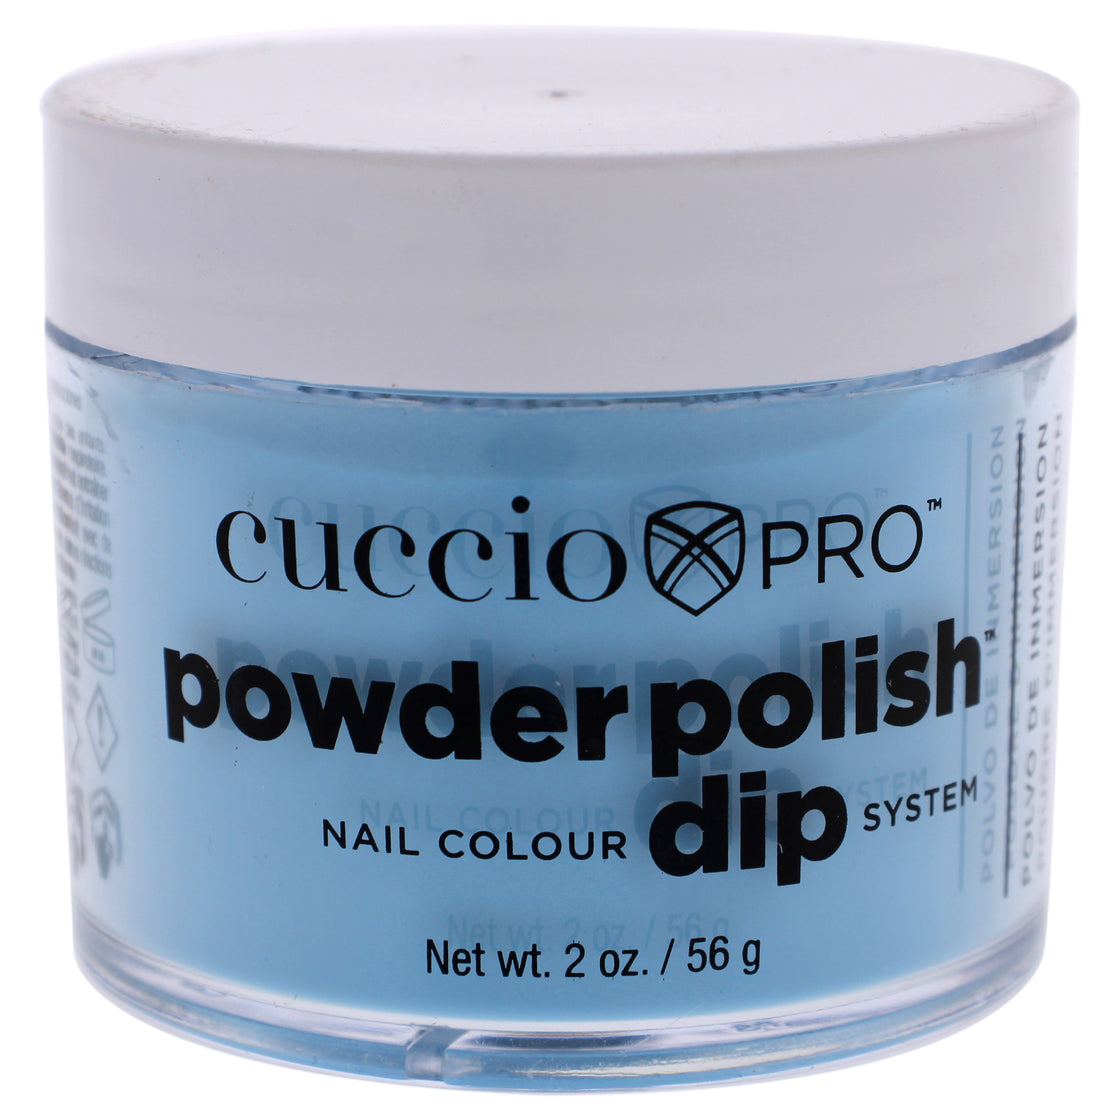 Pro Powder Polish Nail Colour Dip System - Live Your Dreams by Cuccio Colour for Women - 1.6 oz Nail Powder